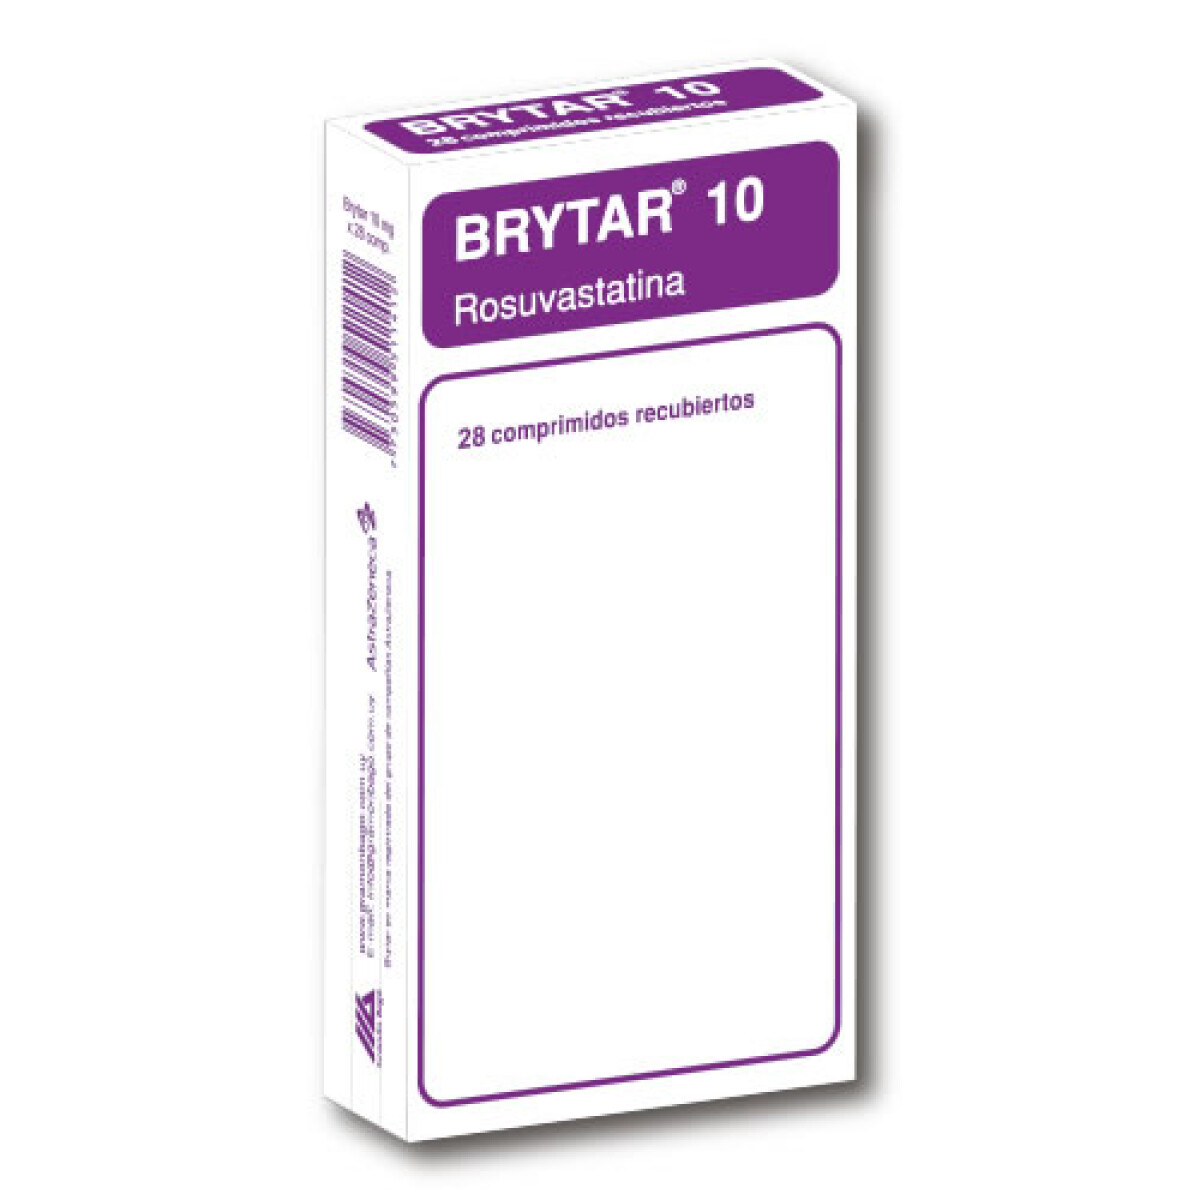 BRYTAR 10 MG X 28 COMPRIMIDOS 